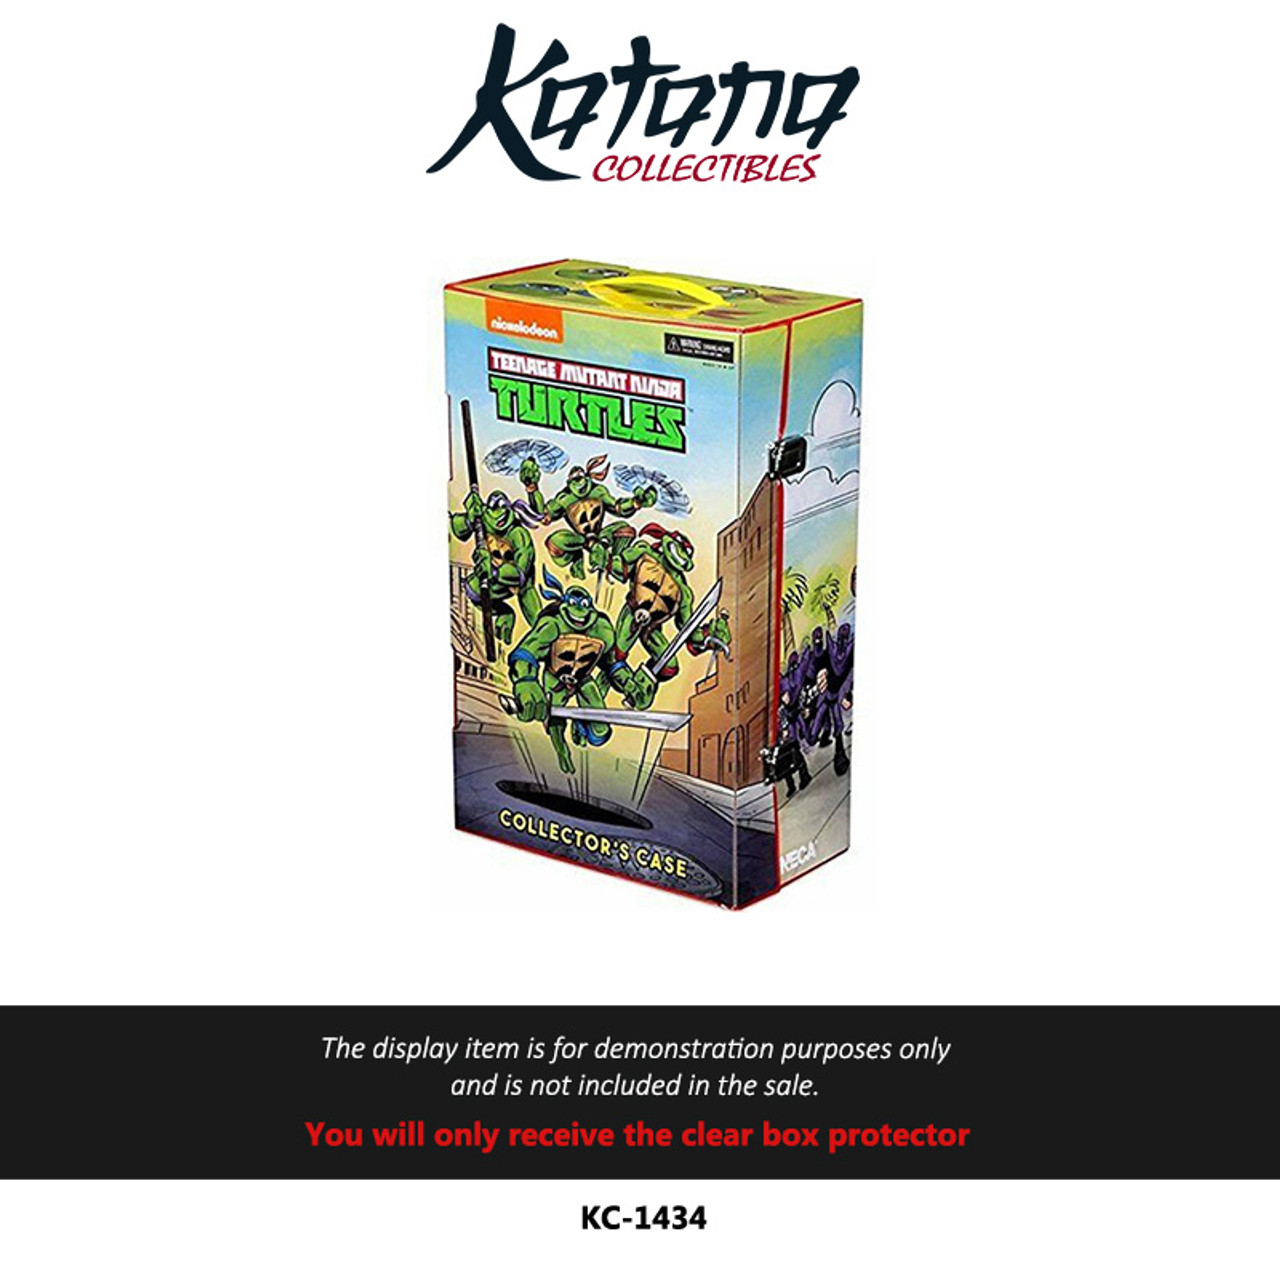 Katana Collectibles Protector For Teenage Mutant Ninja Turtles 2017 Collectors Case